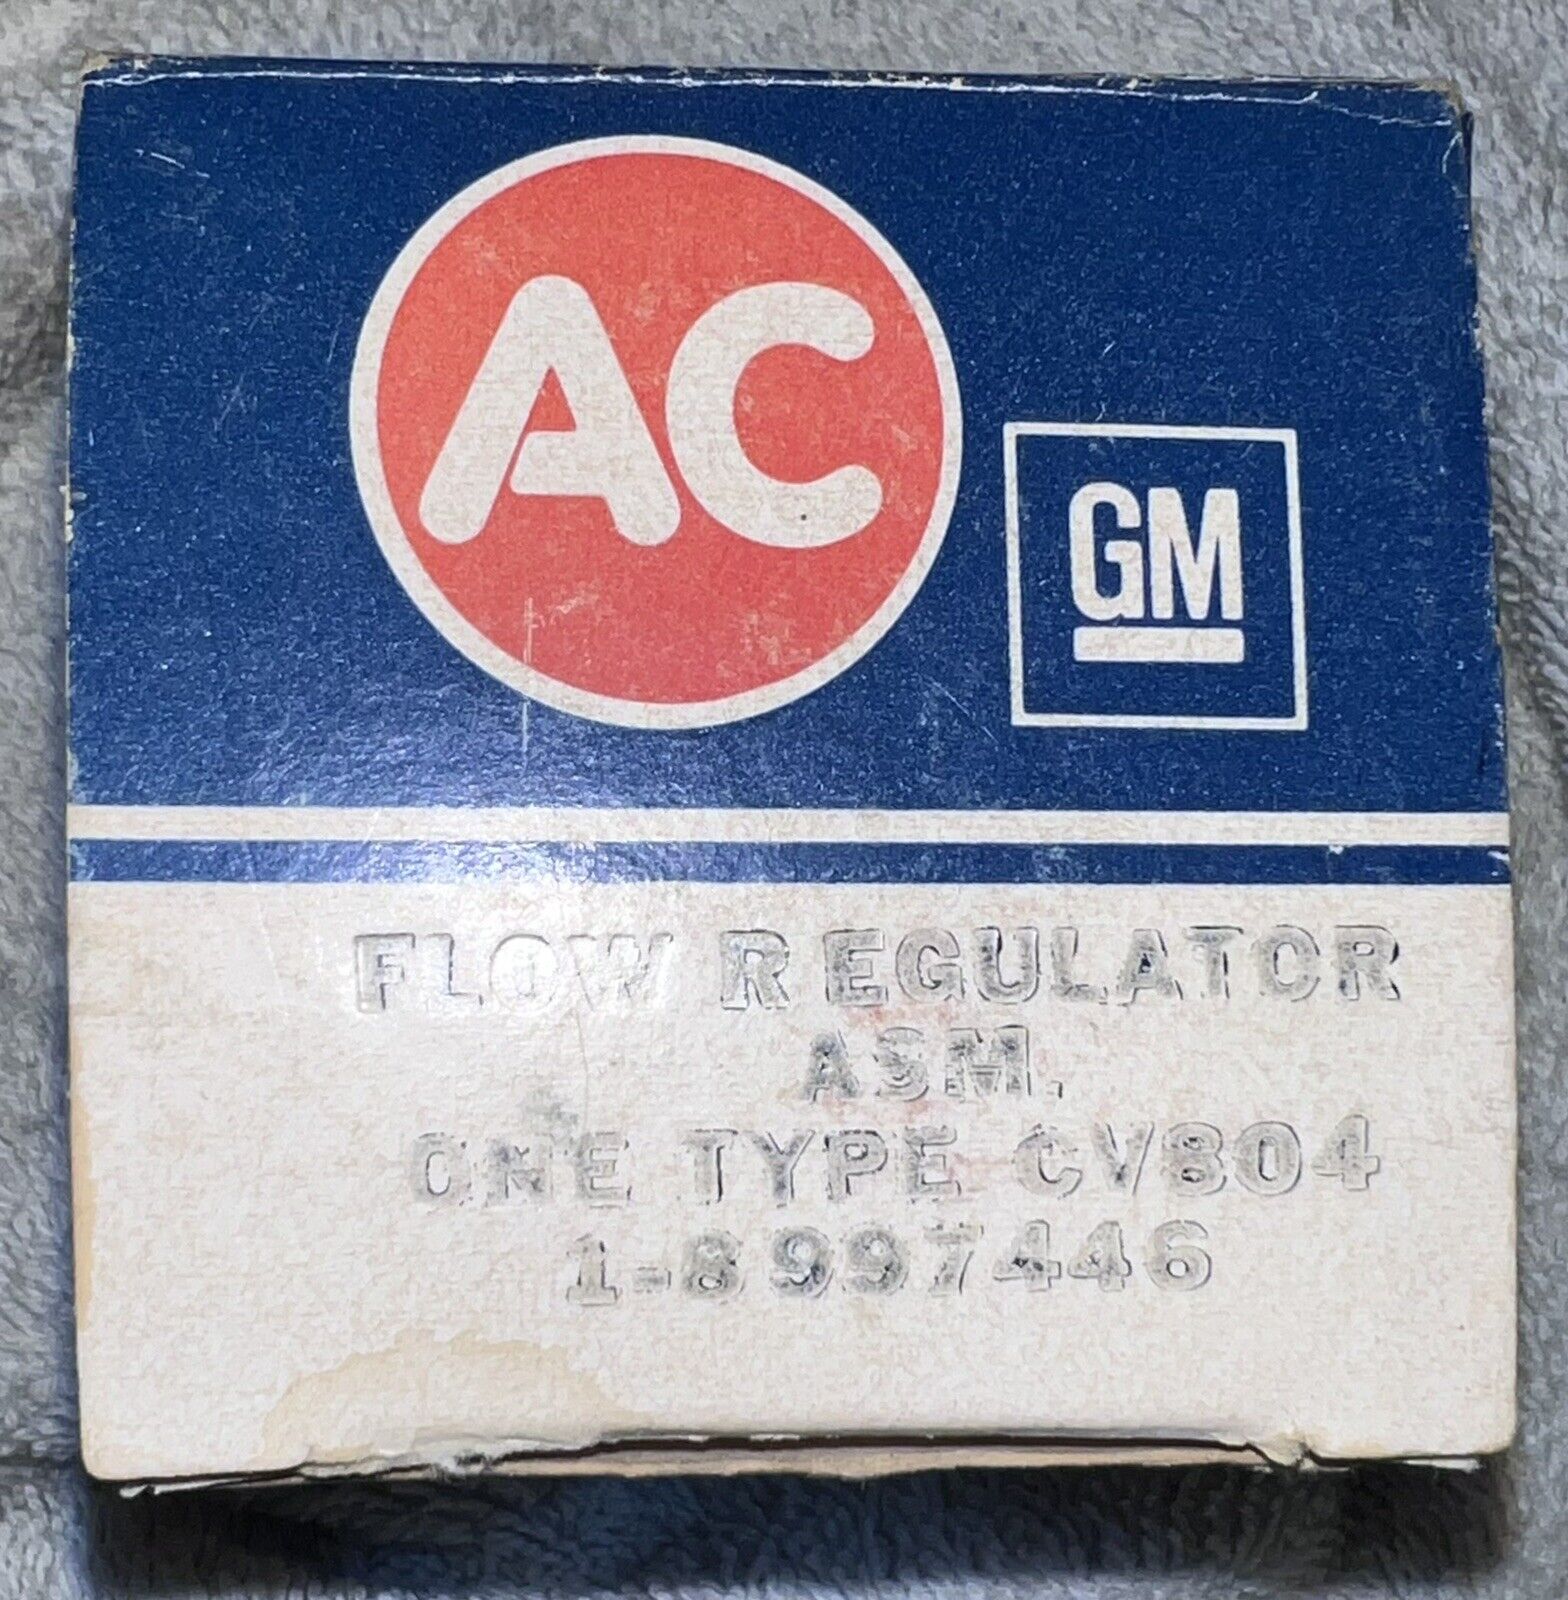 New AC CV804 Flow Regulator PCV 8997446 Fits 1978-82 CHEVY GMC GM 5.7L Diesel